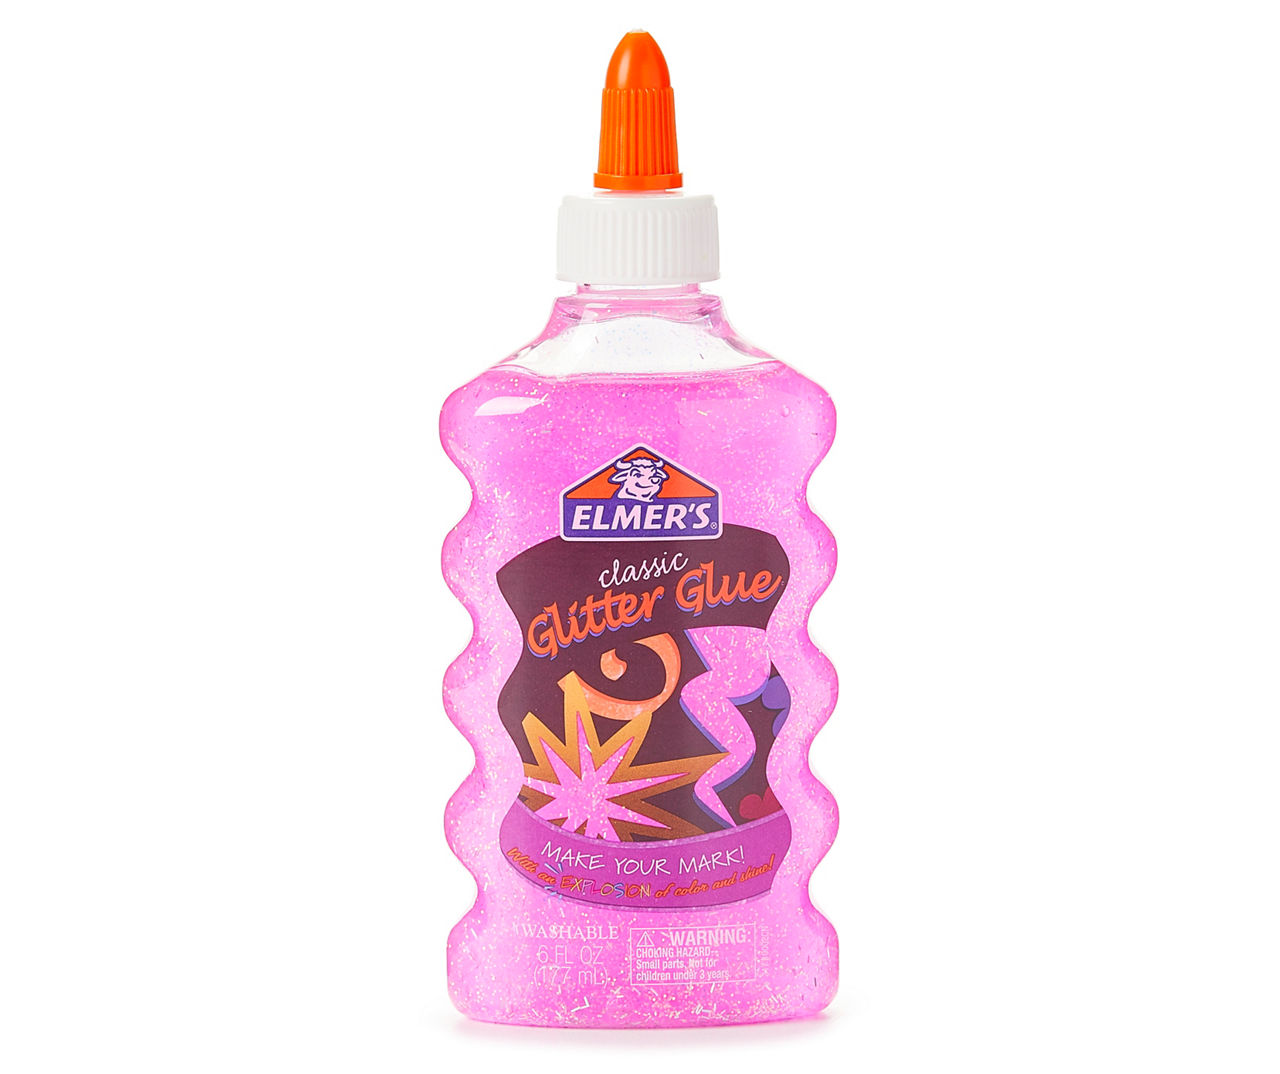 Elmer's Glitter Liquid Glue